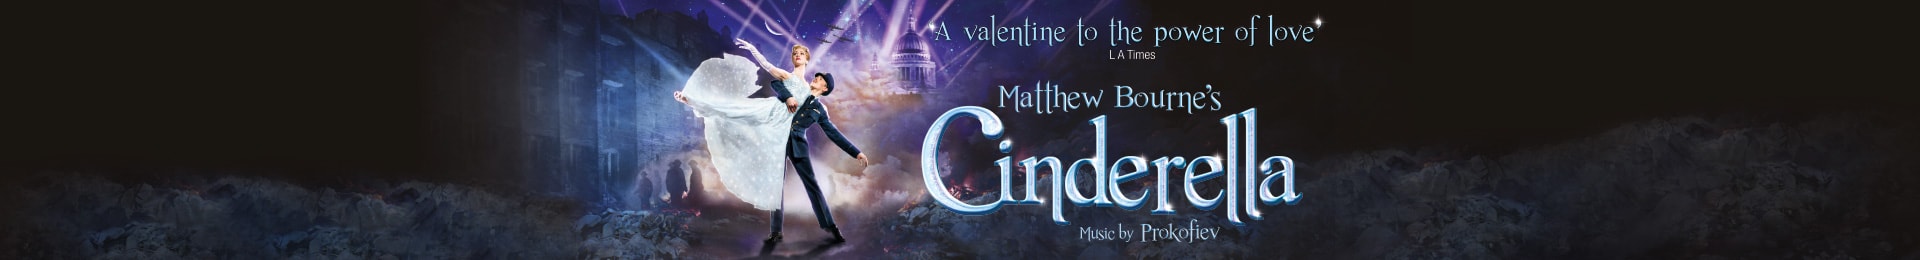 Matthew Bourne's Cinderella — New Adventures banner image